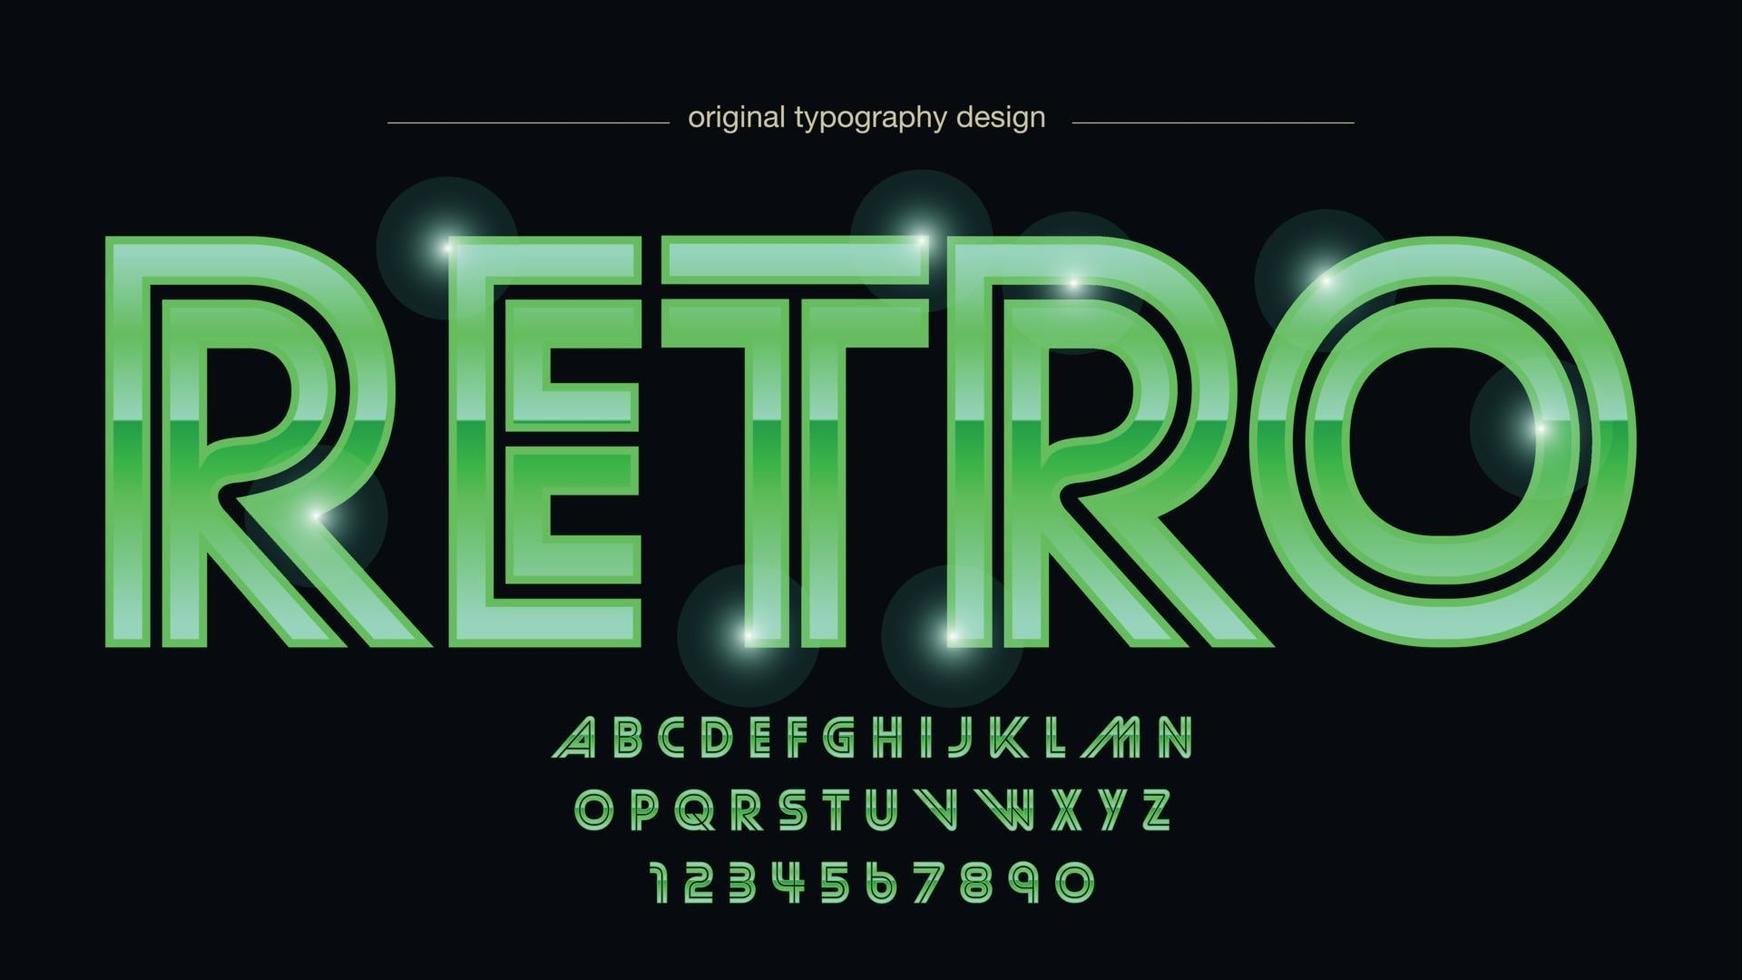 tipografia retro maiúscula verde neon vetor